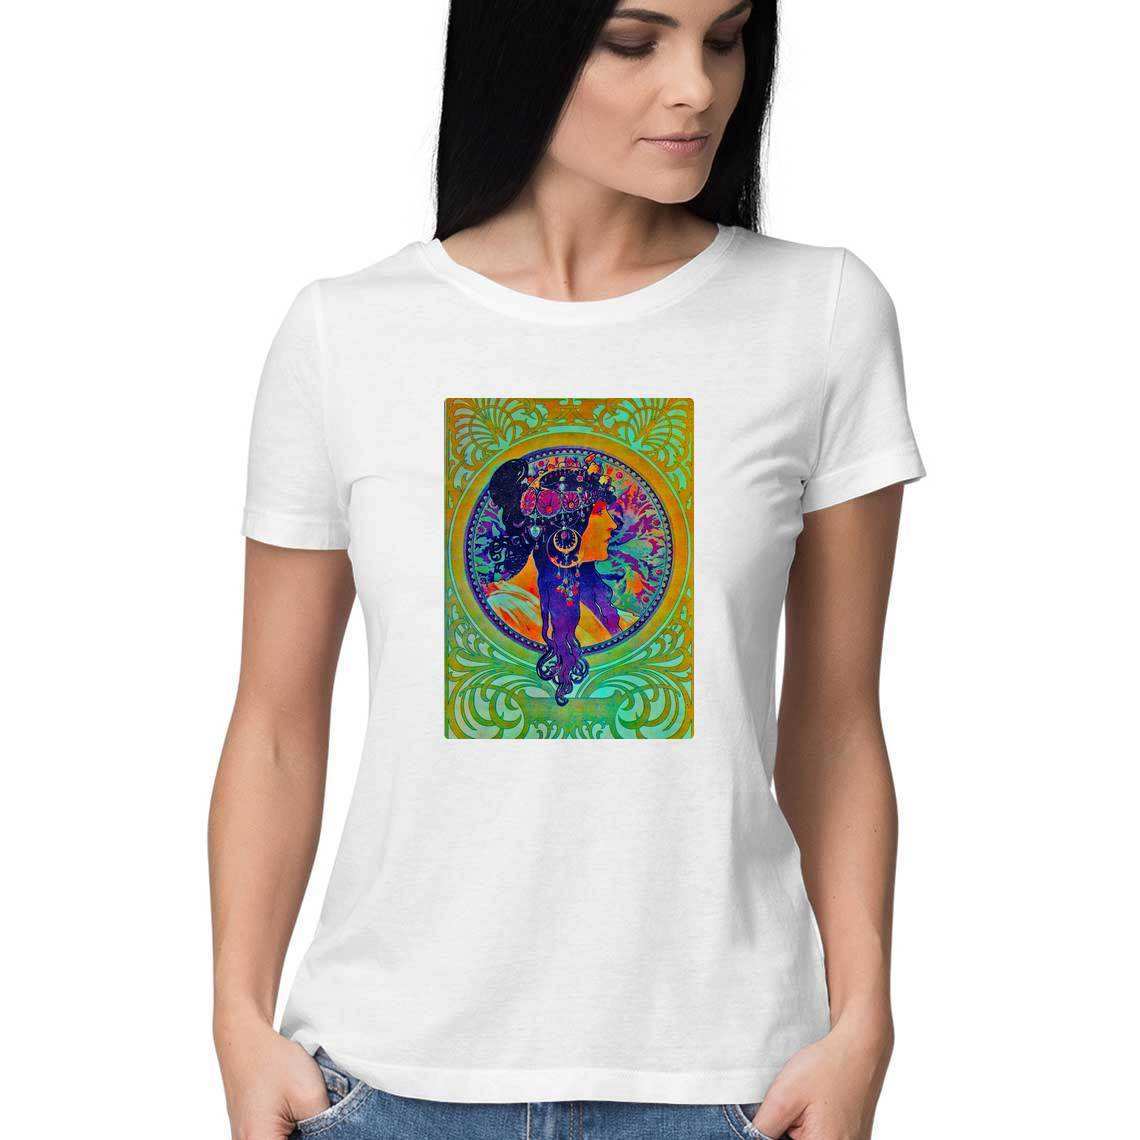 The Best Cotton T-Shirts - Alphonse Mucha Donna Orechini Women's T-Shirt - CBD Store India